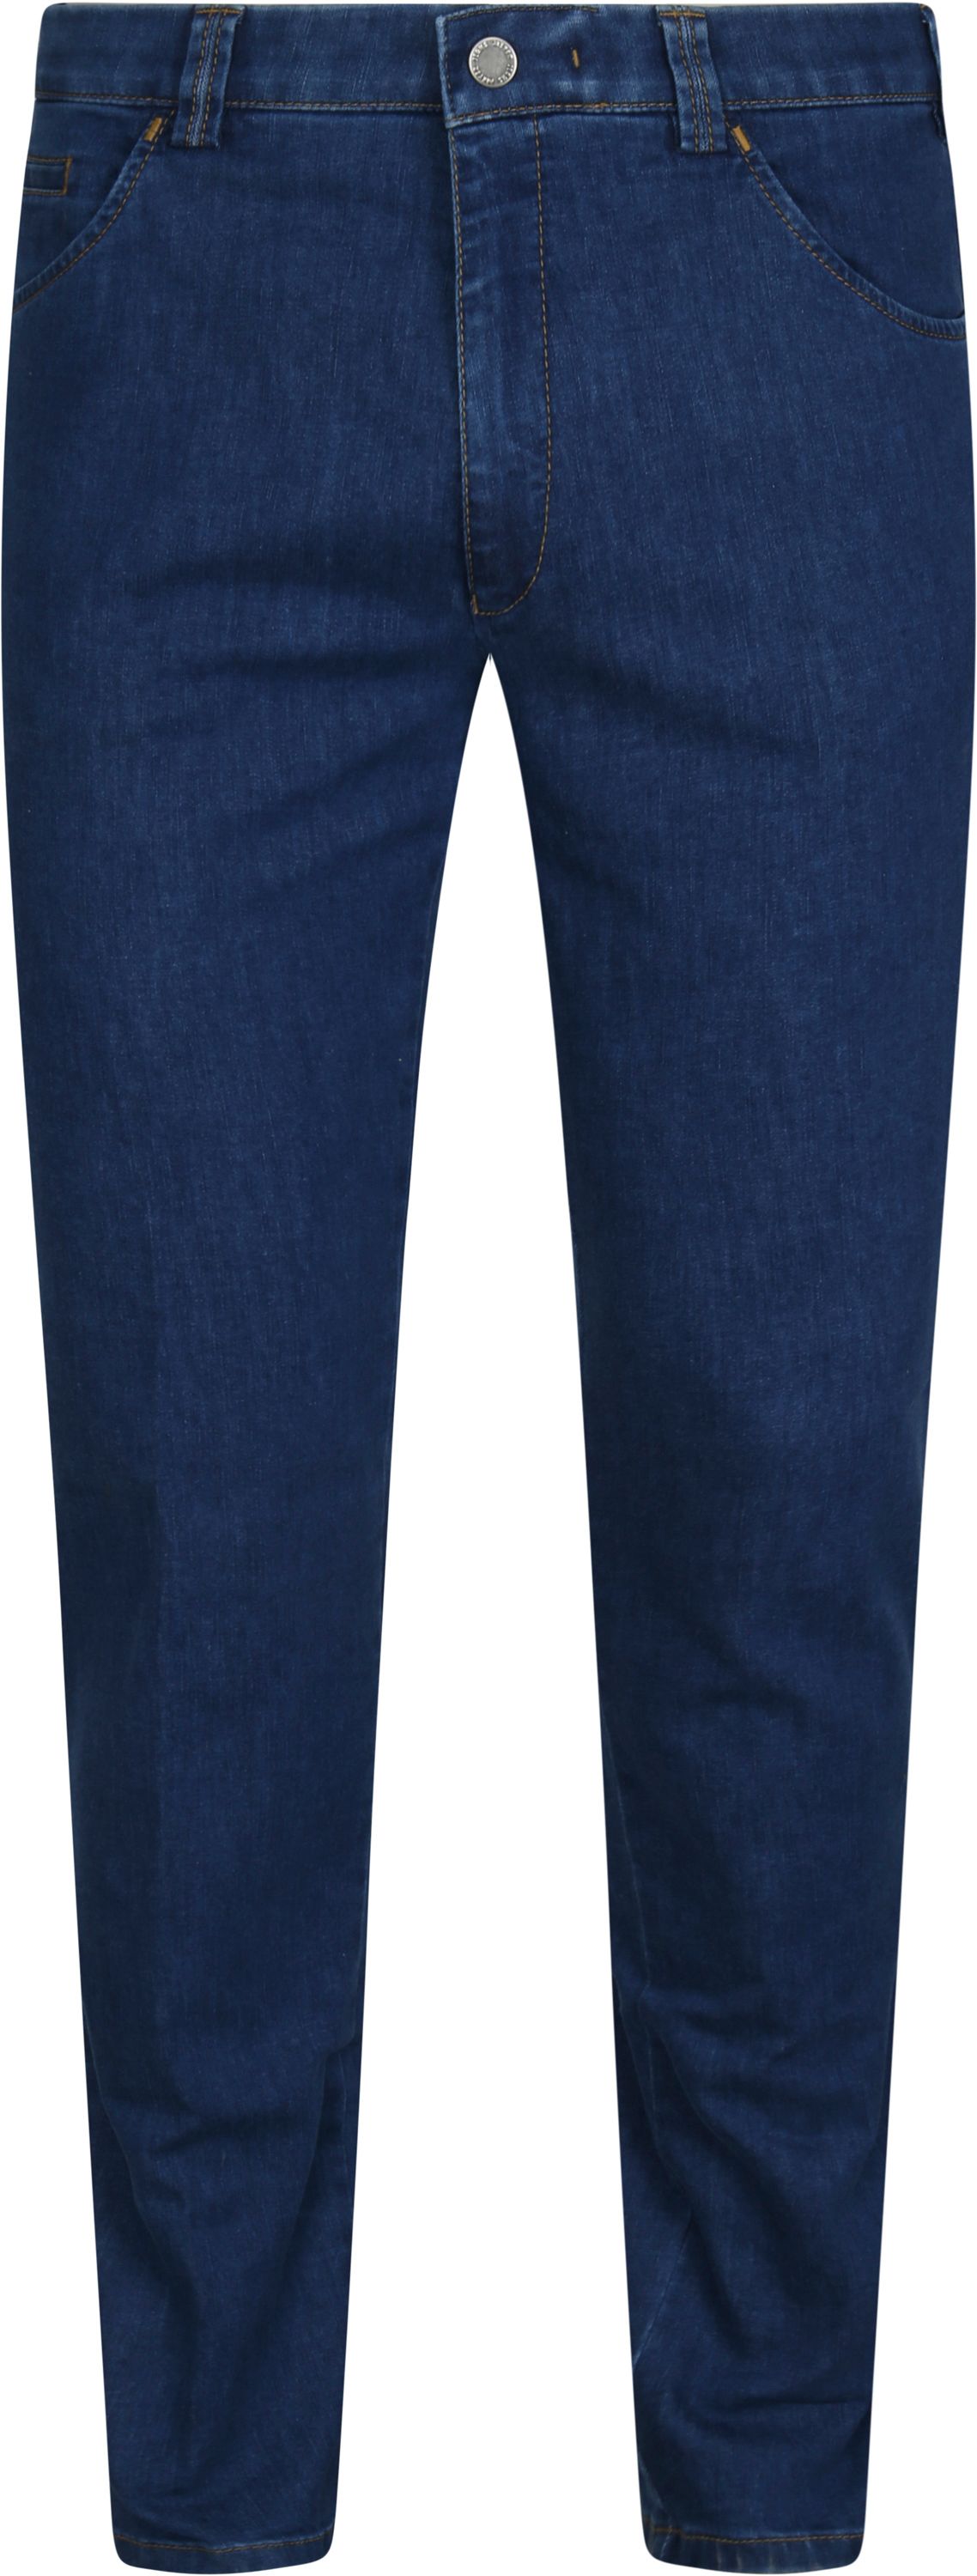 Meyer Dublin Jeans Dark Blue Dark Blue size W 32/33